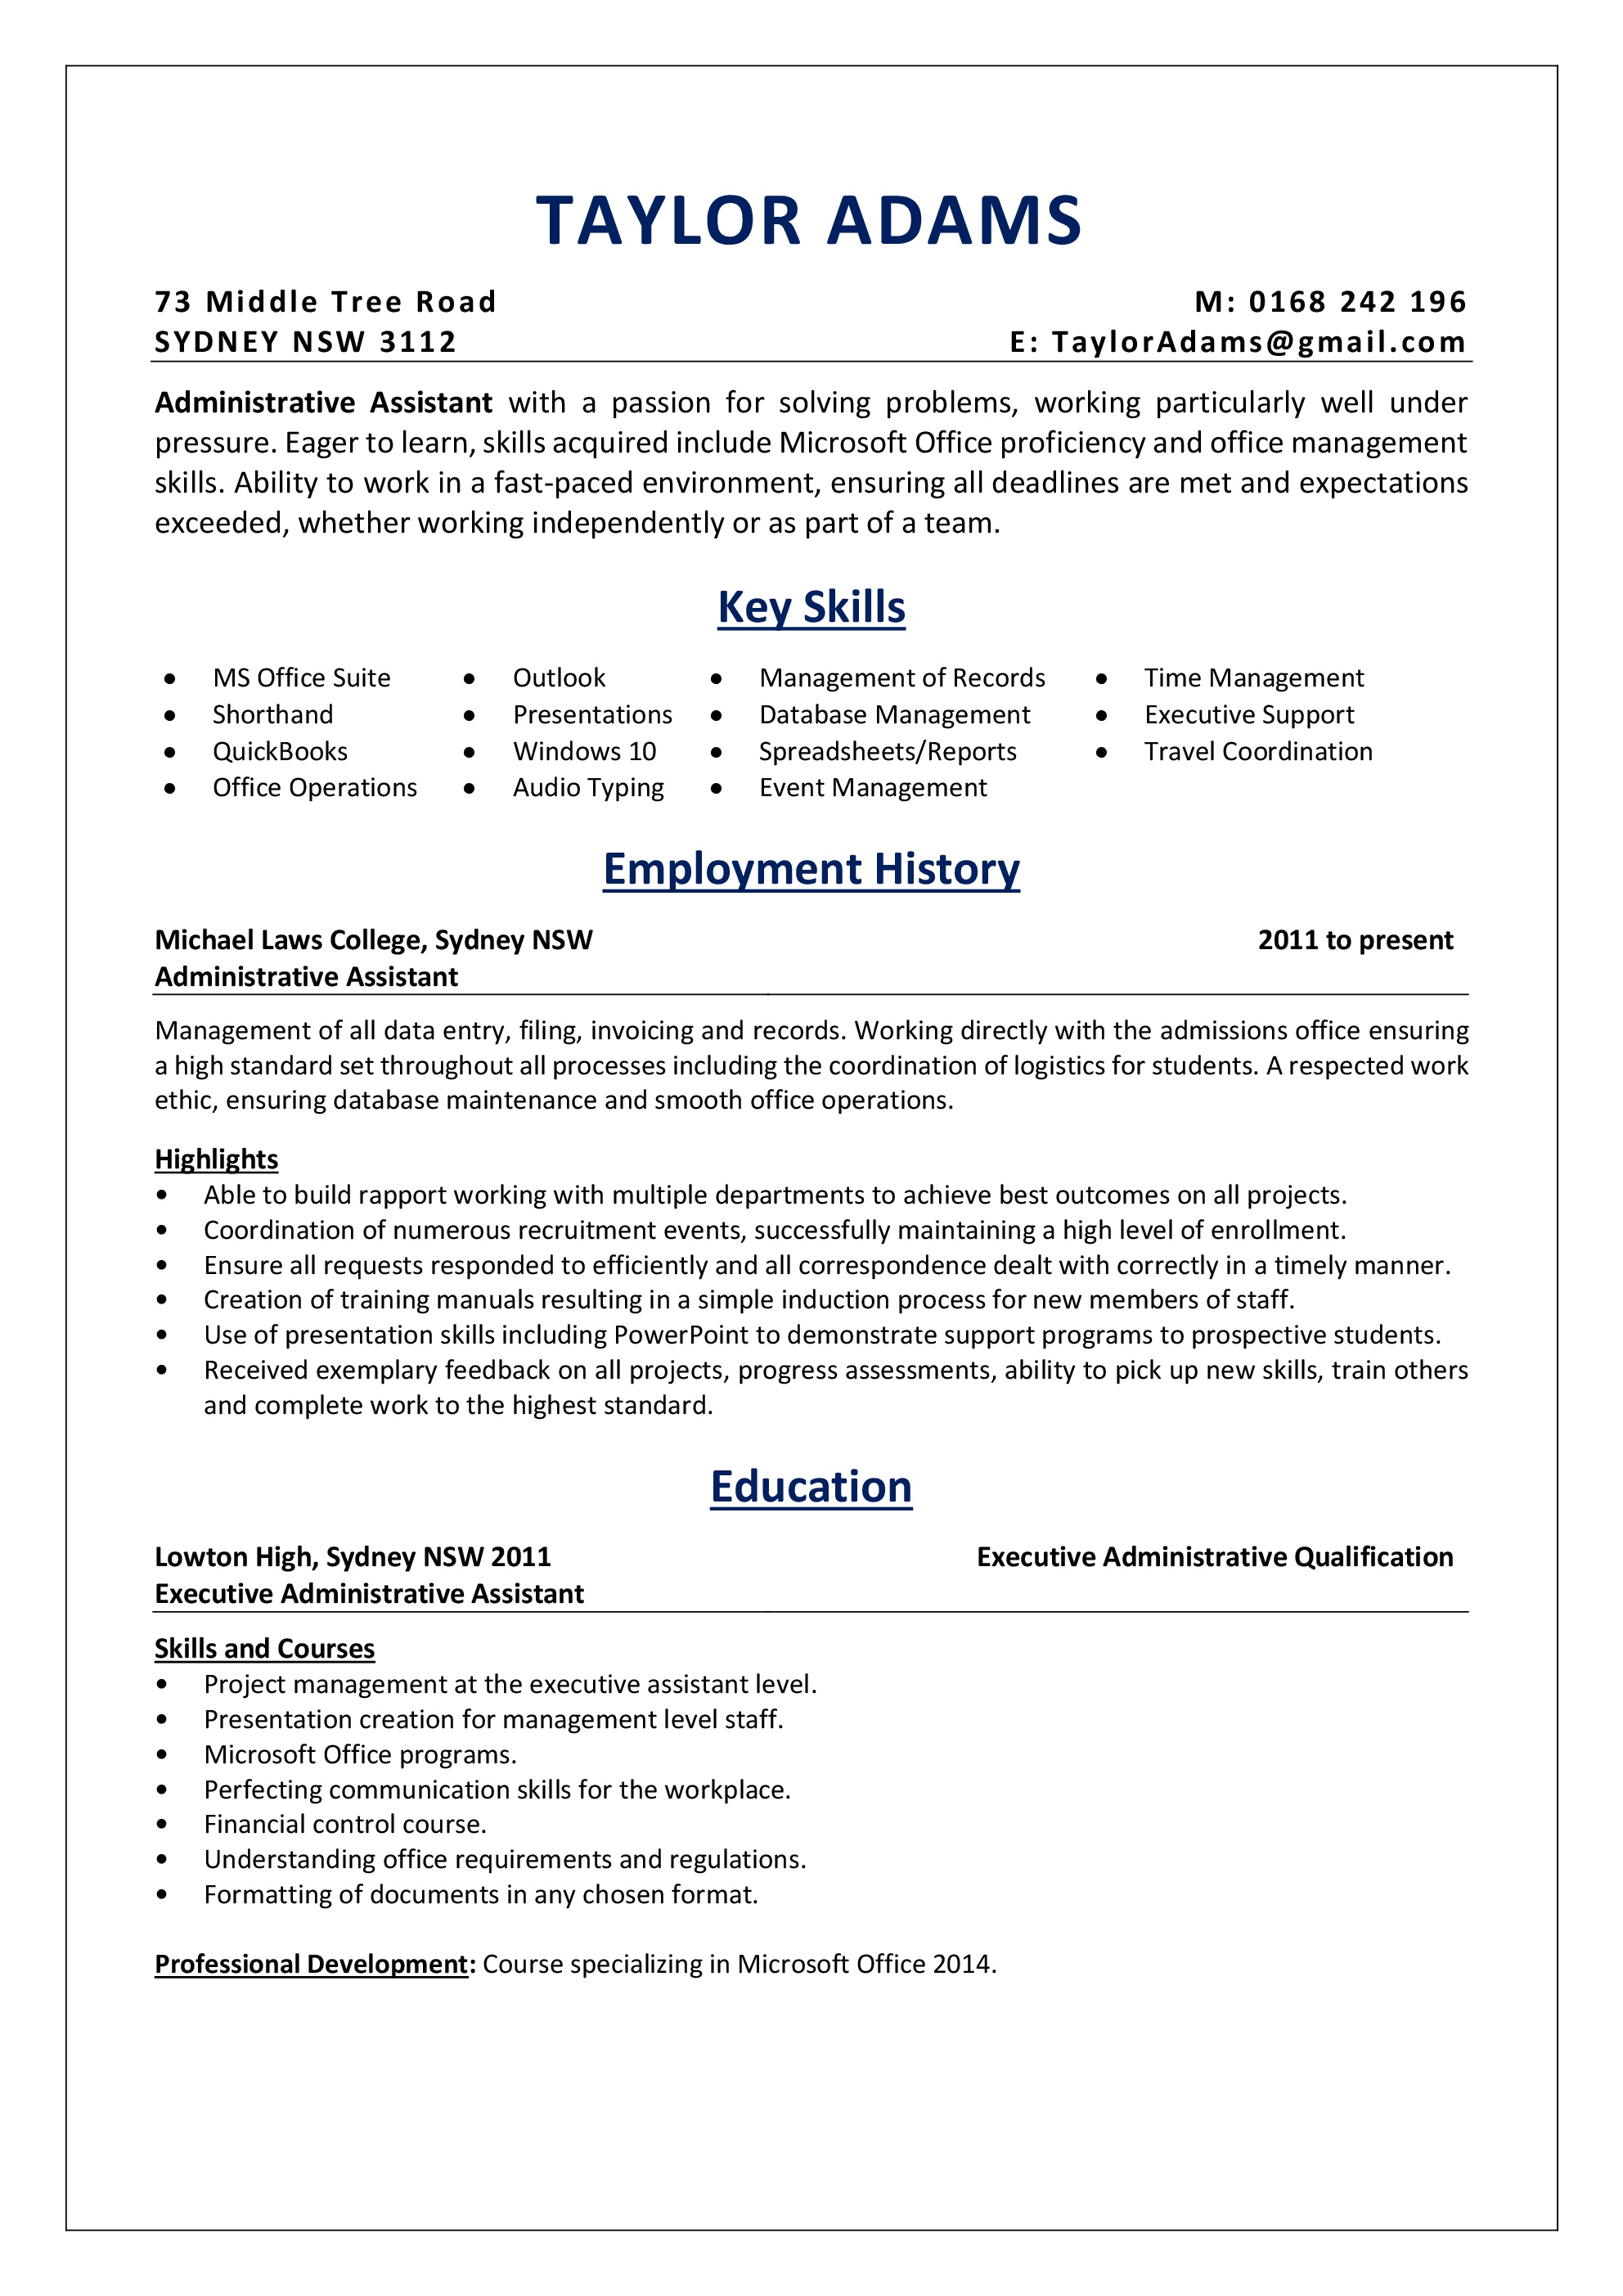 Office Assistant Resume Administrative Assistant Resume Sample Image 1 office assistant resume|wikiresume.com